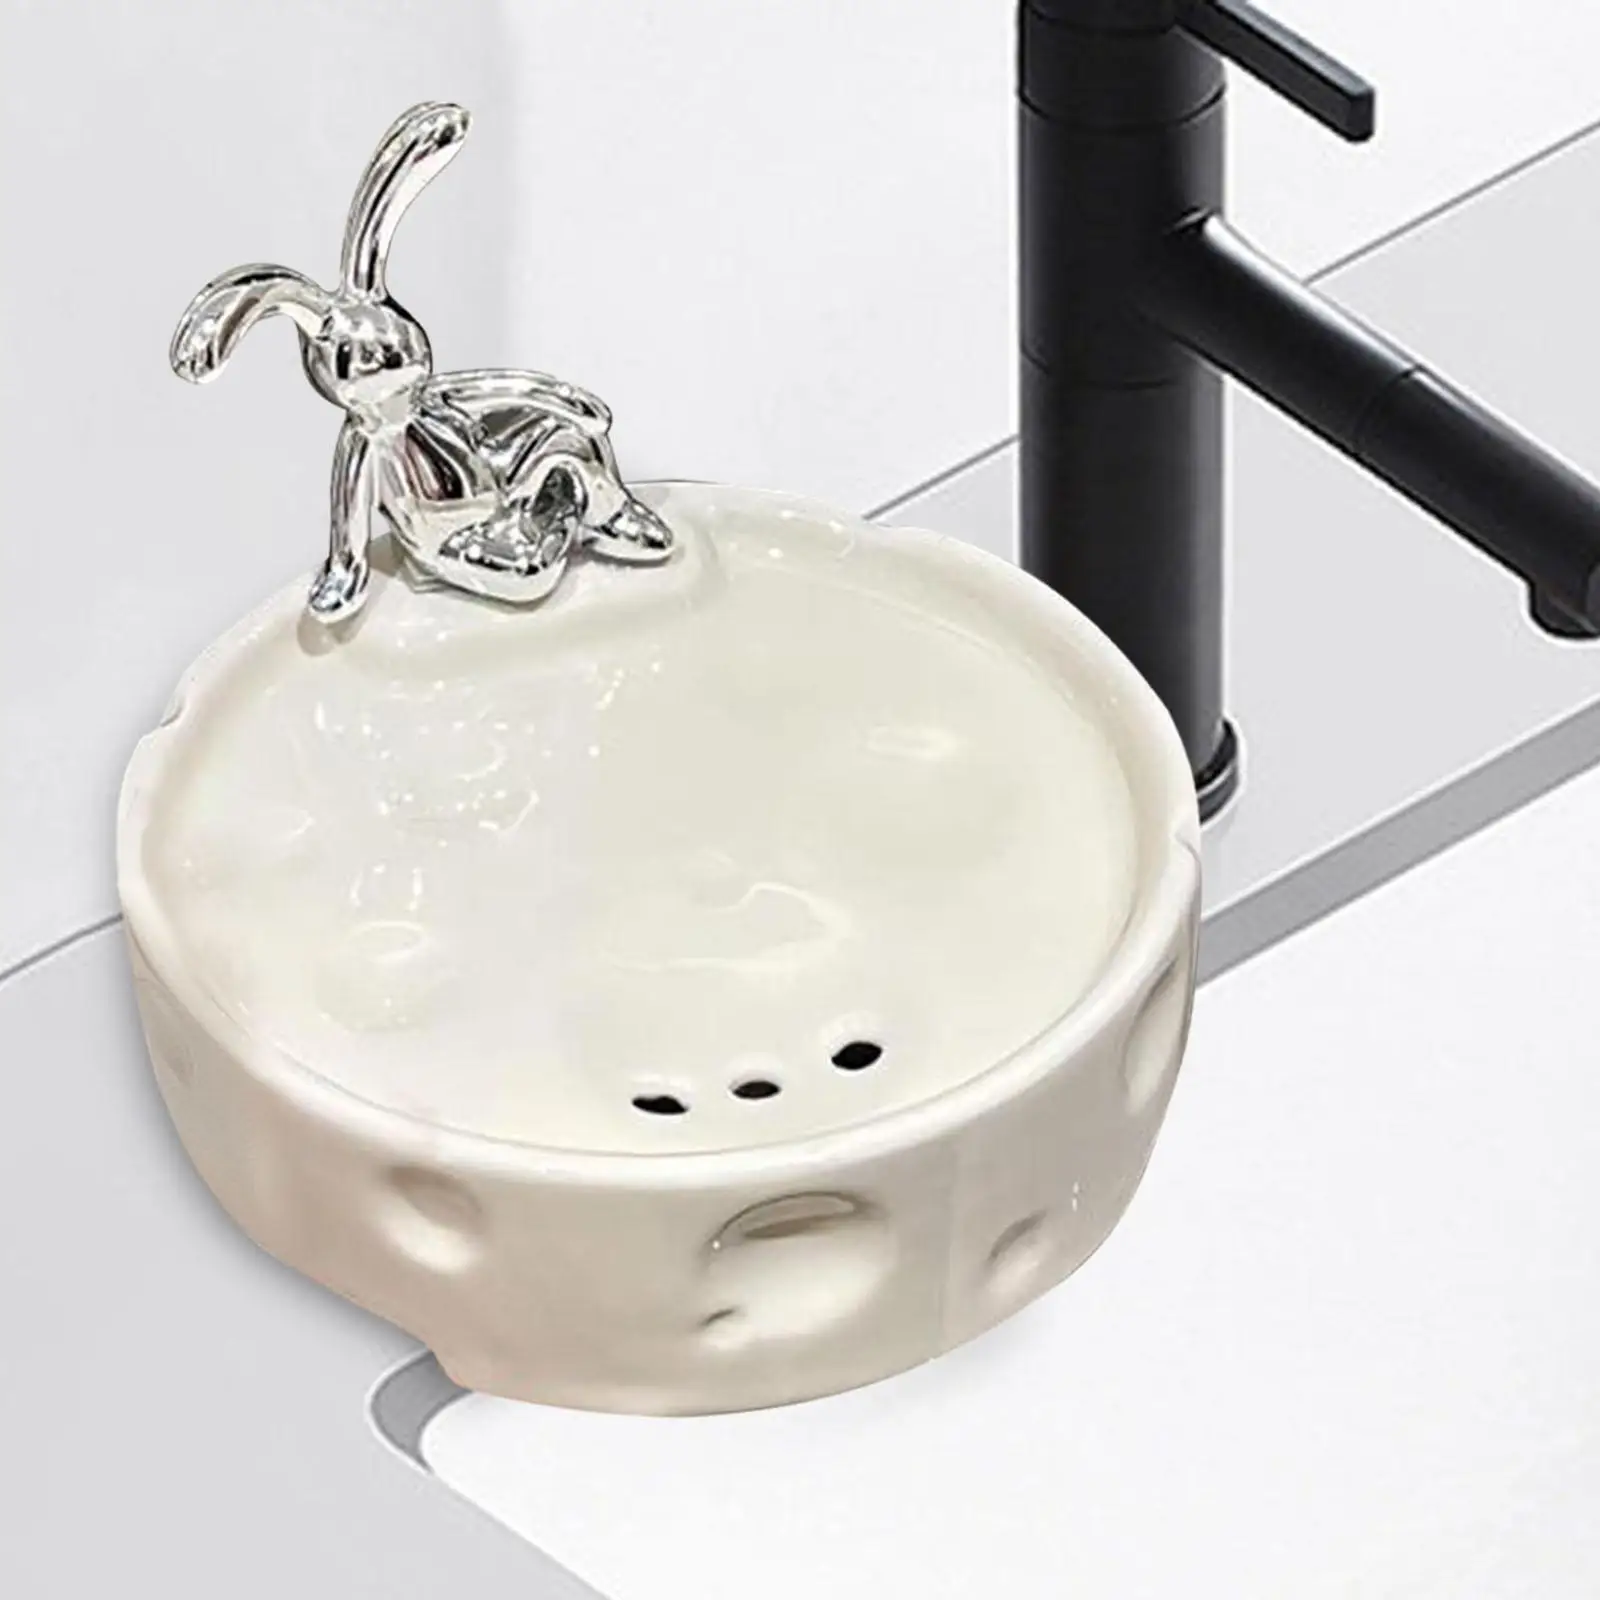 Soap Dish Easy Clean Stop Mushy Soap Self Draining Rabbit Decorative Soap Holder for Shower Kitchen Bathroom Sponges Bath Tub